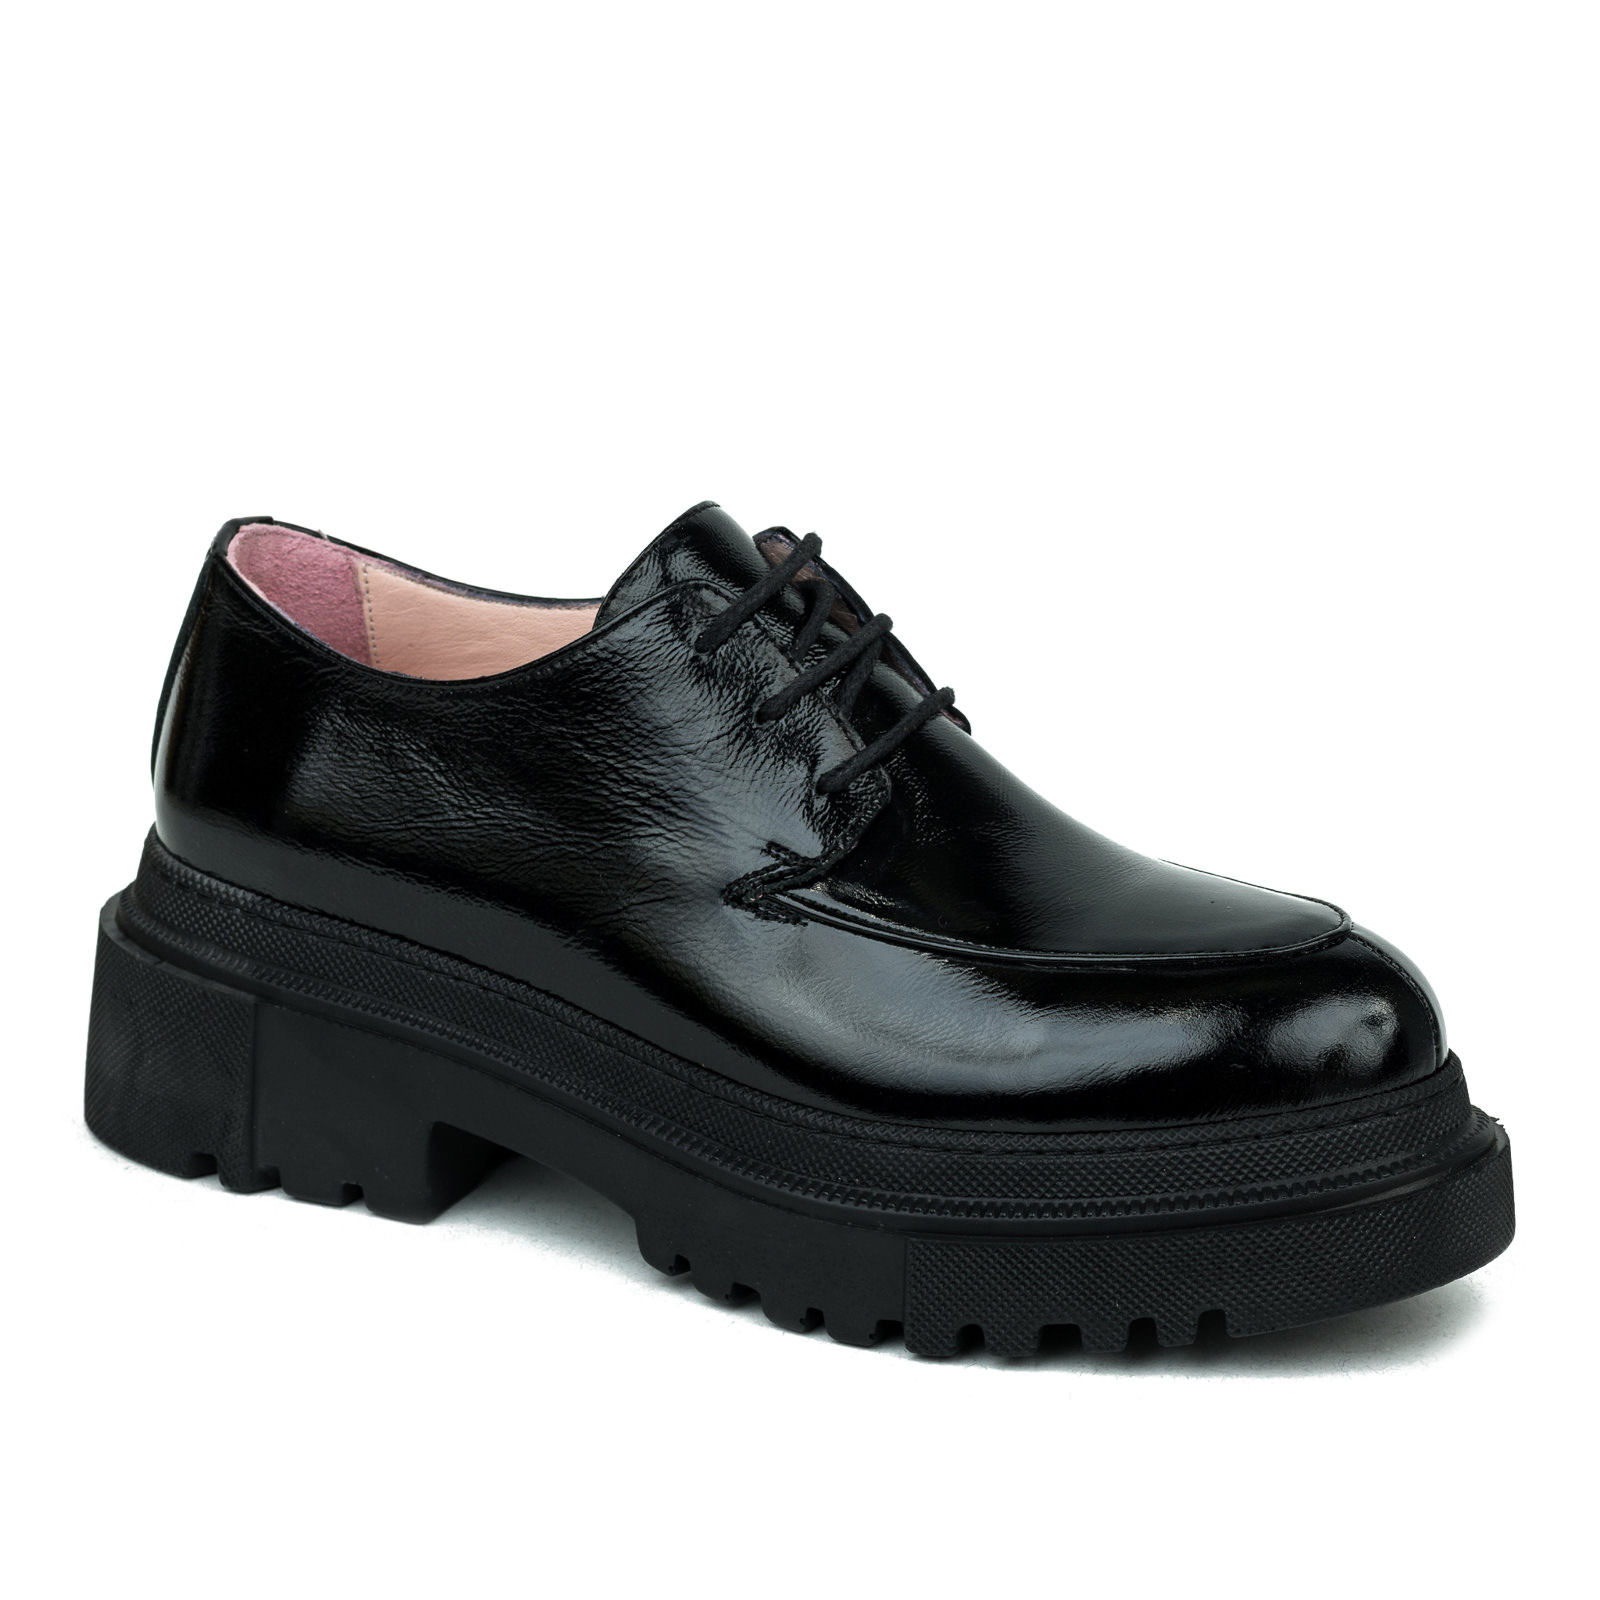 Leather shoes & flats B189 - BLACK